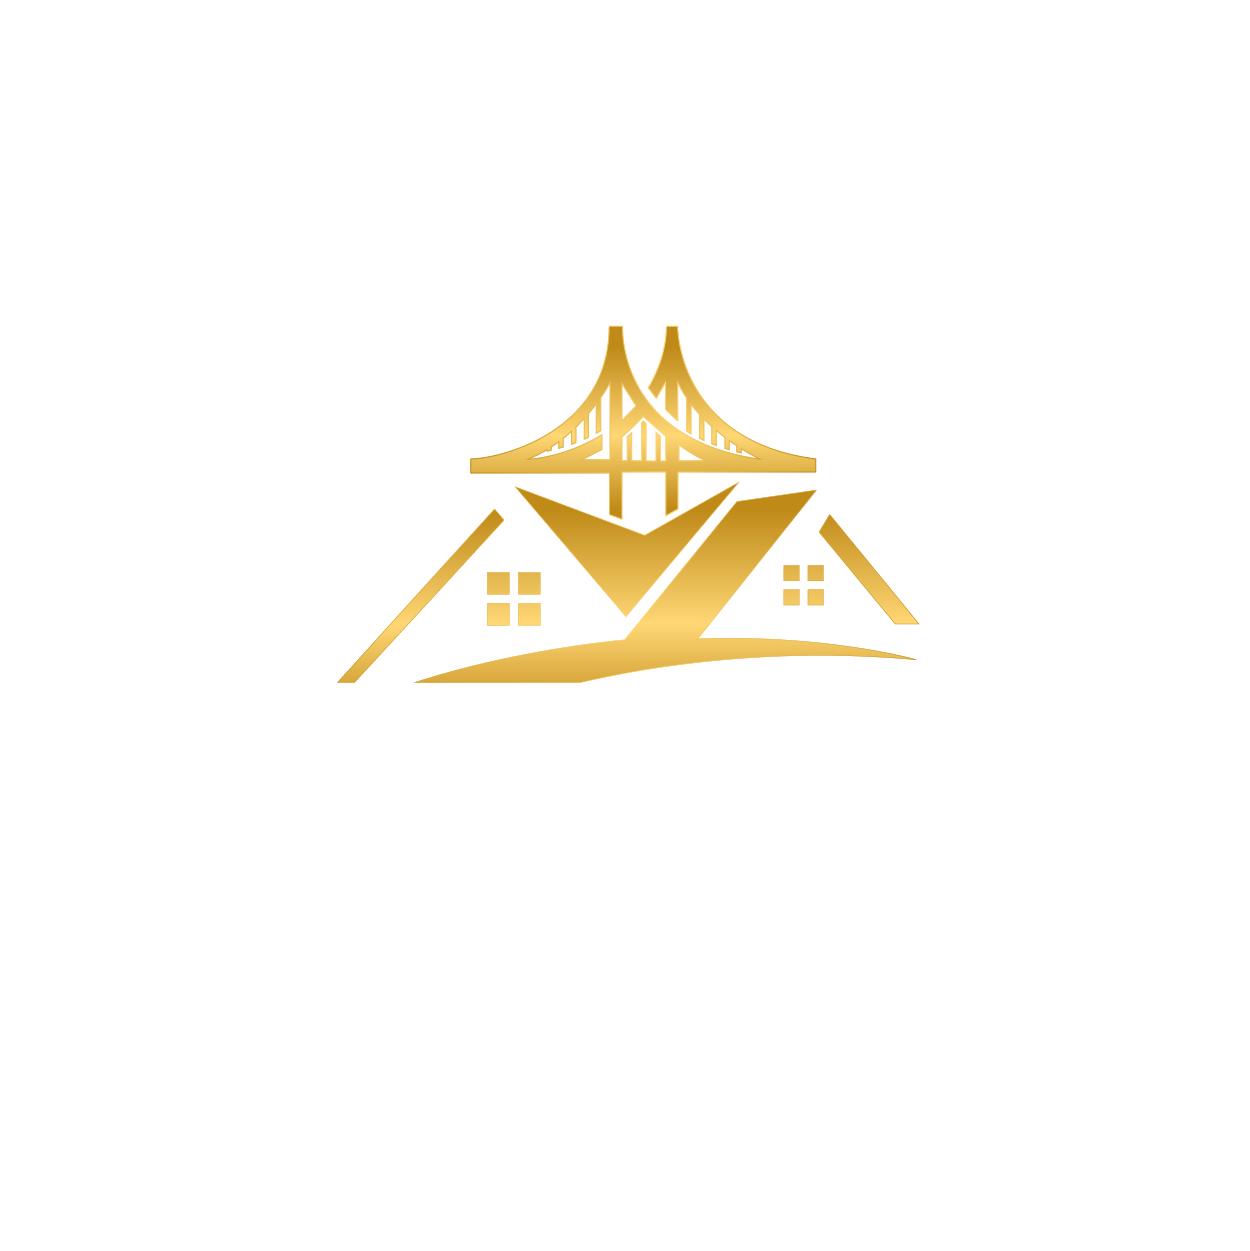 Bay Quality Construction, Inc Logo